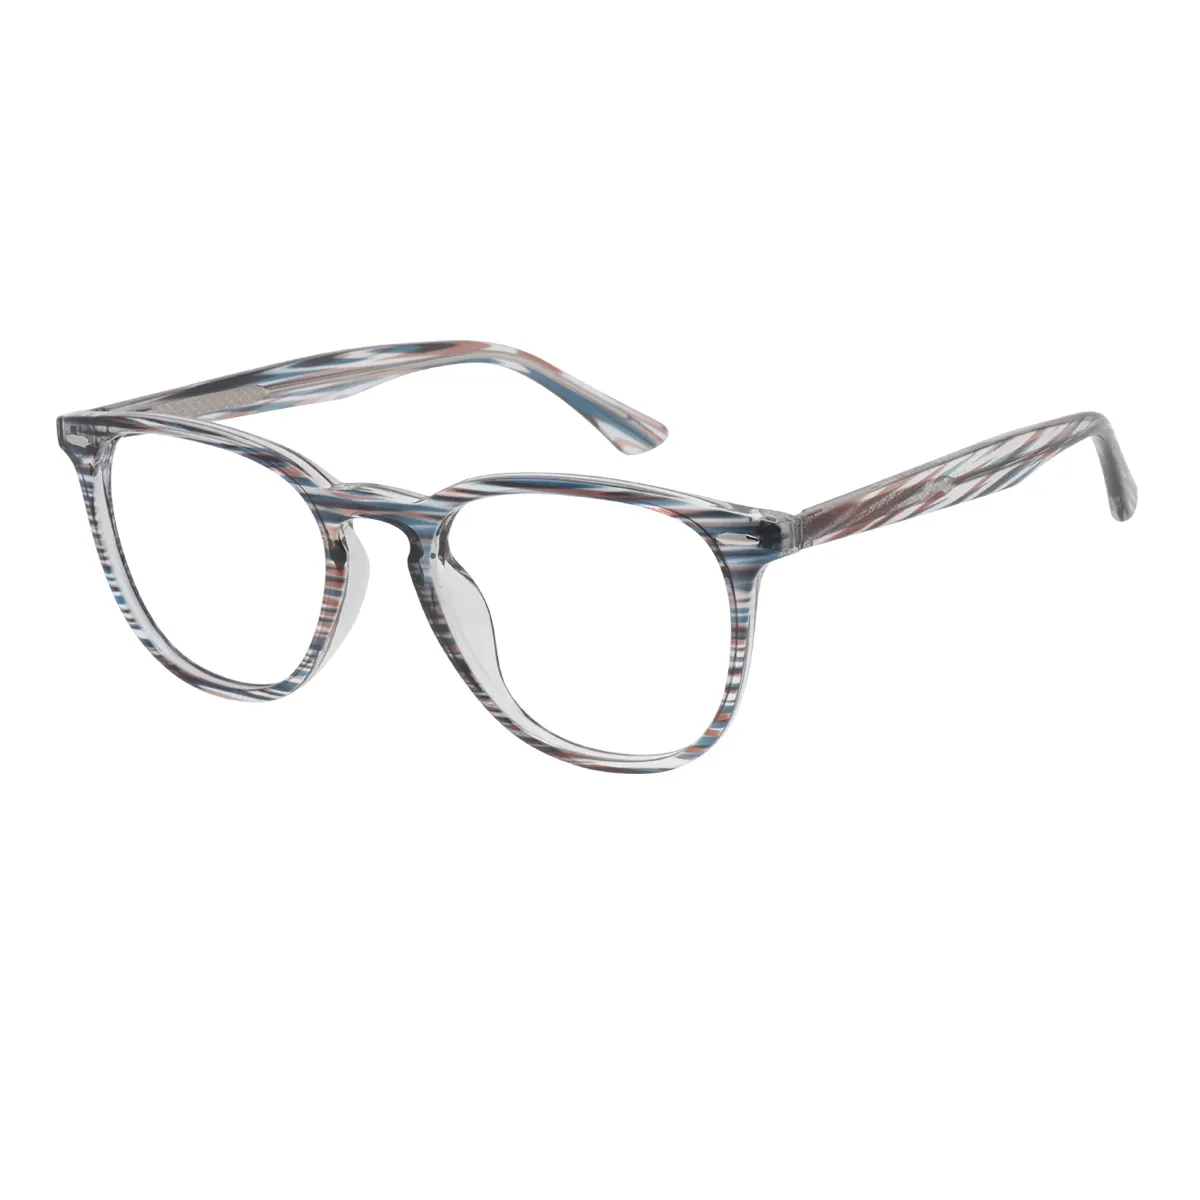 Classic Square Tortoiseshell Glasses for Men & Women